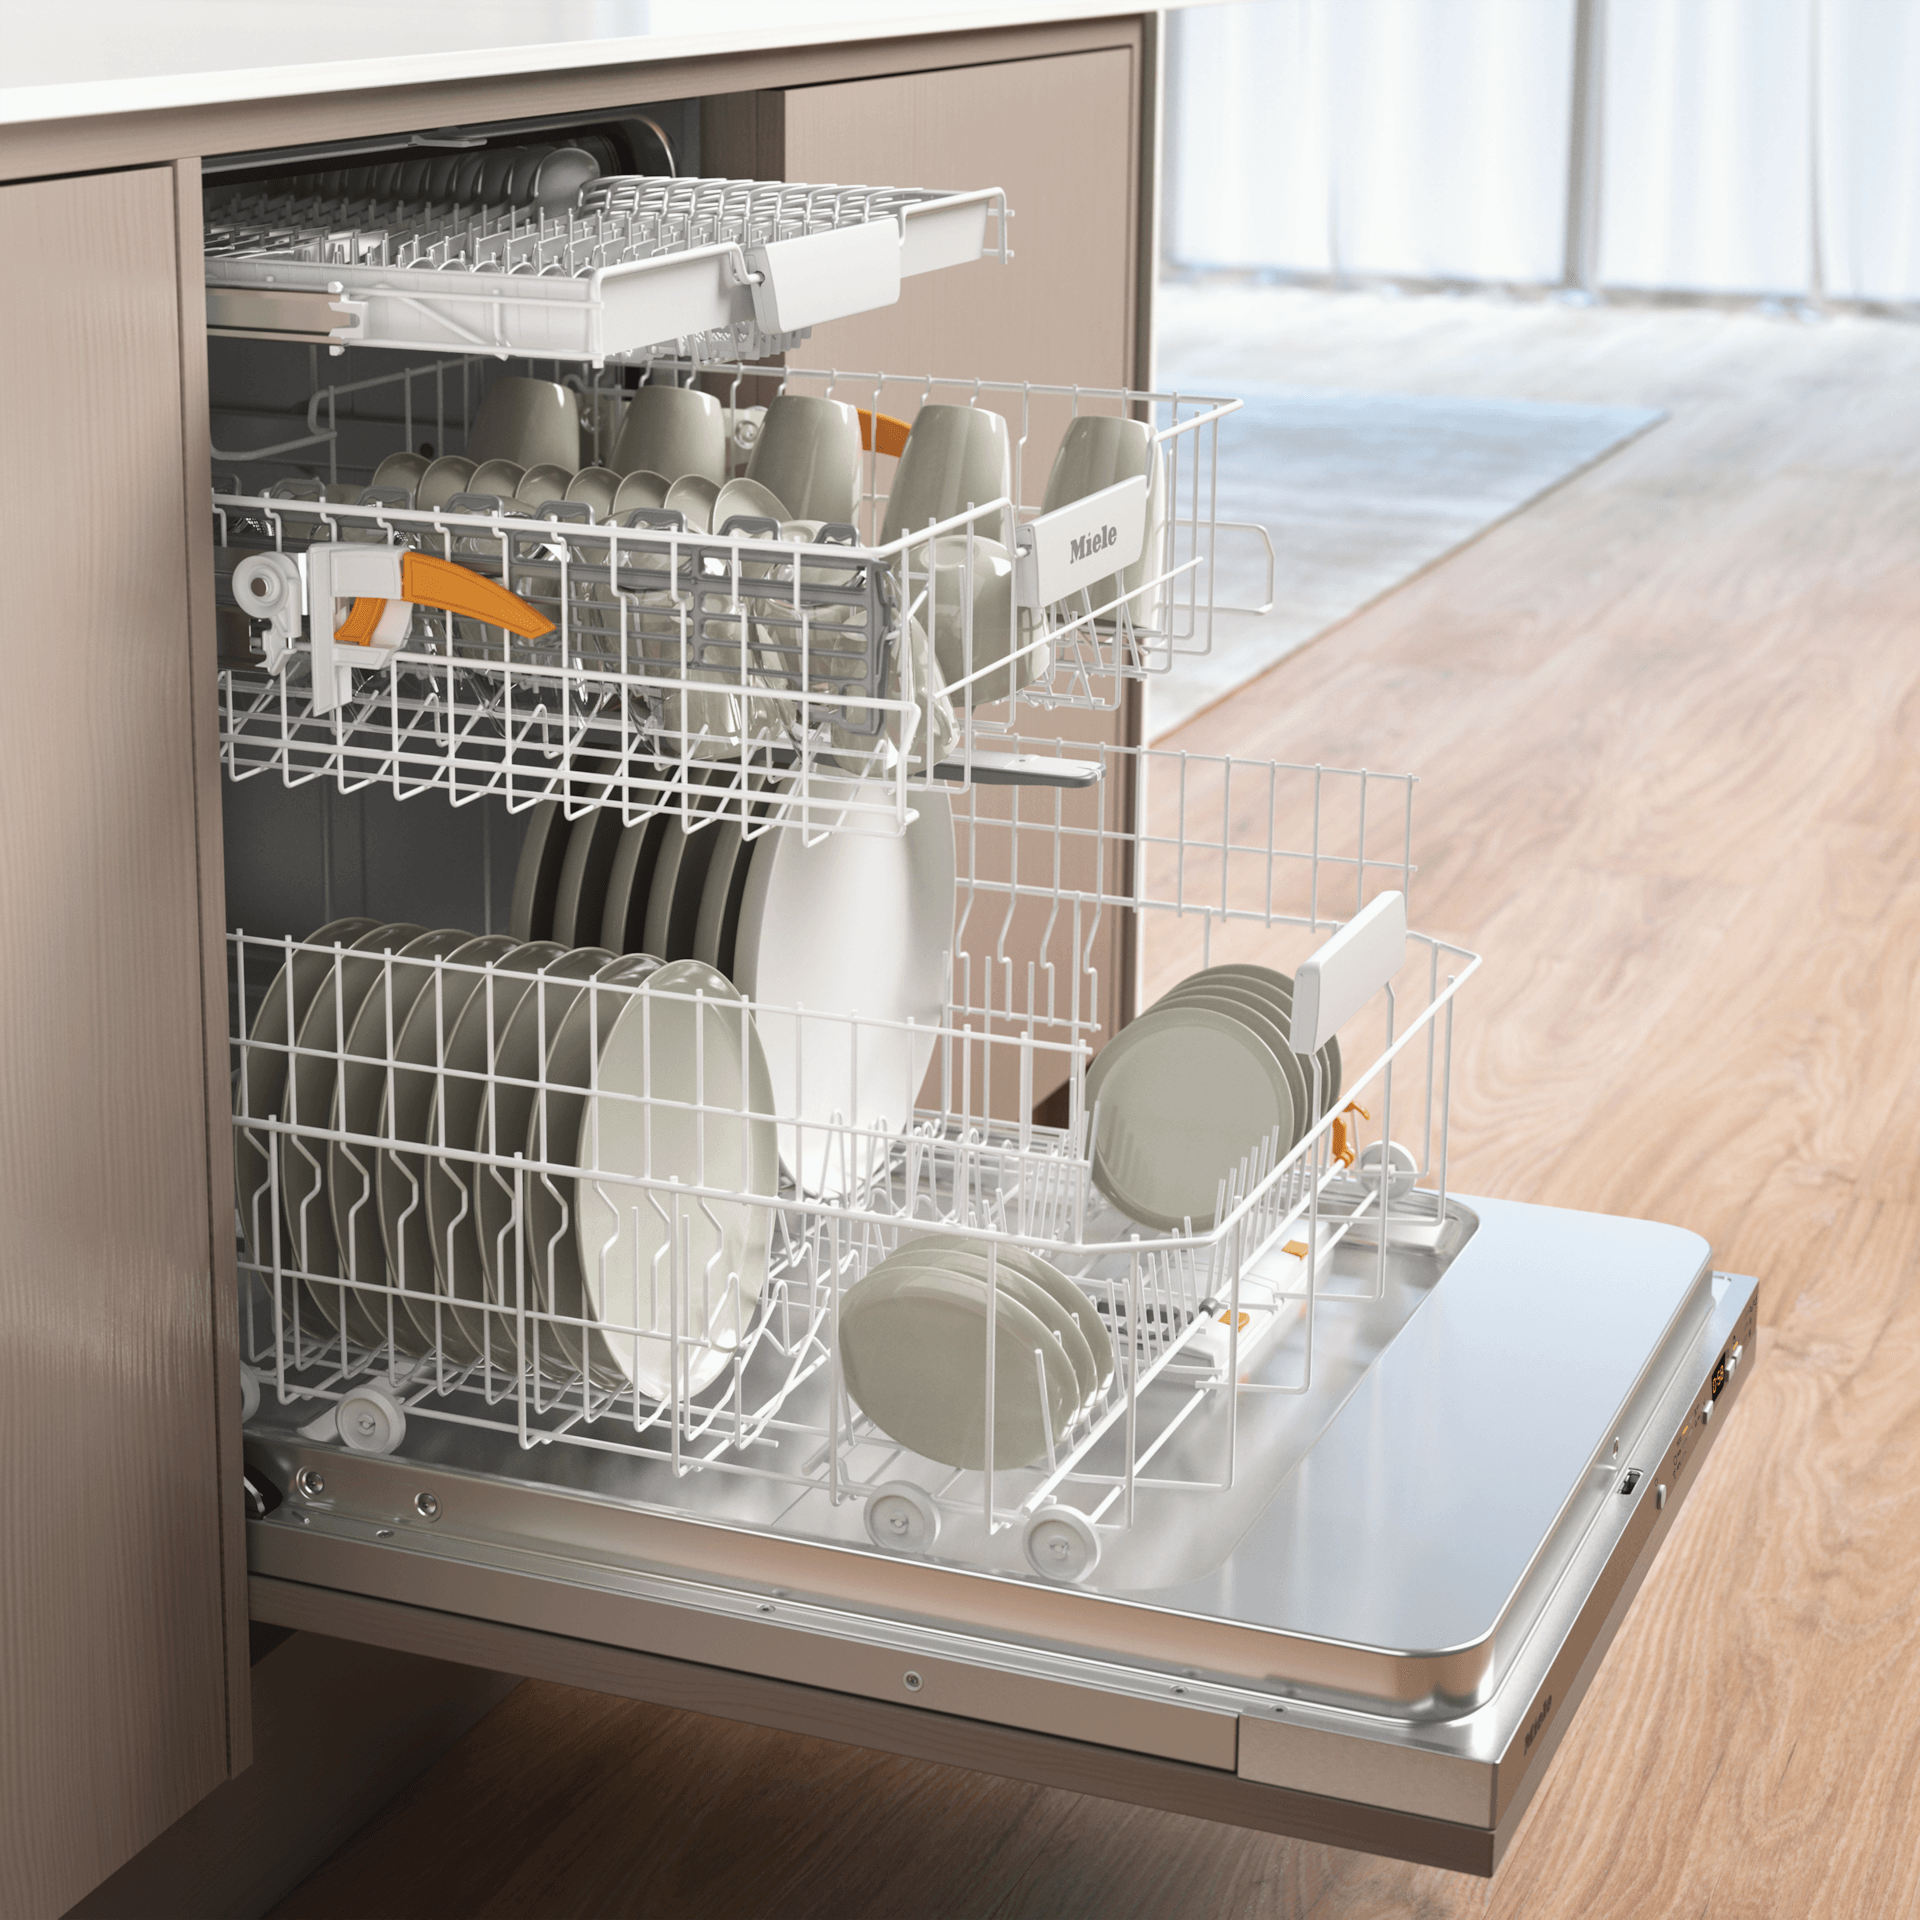 Miele Fully-Integrated Dishwashers G5150 SCVi - Posh Import